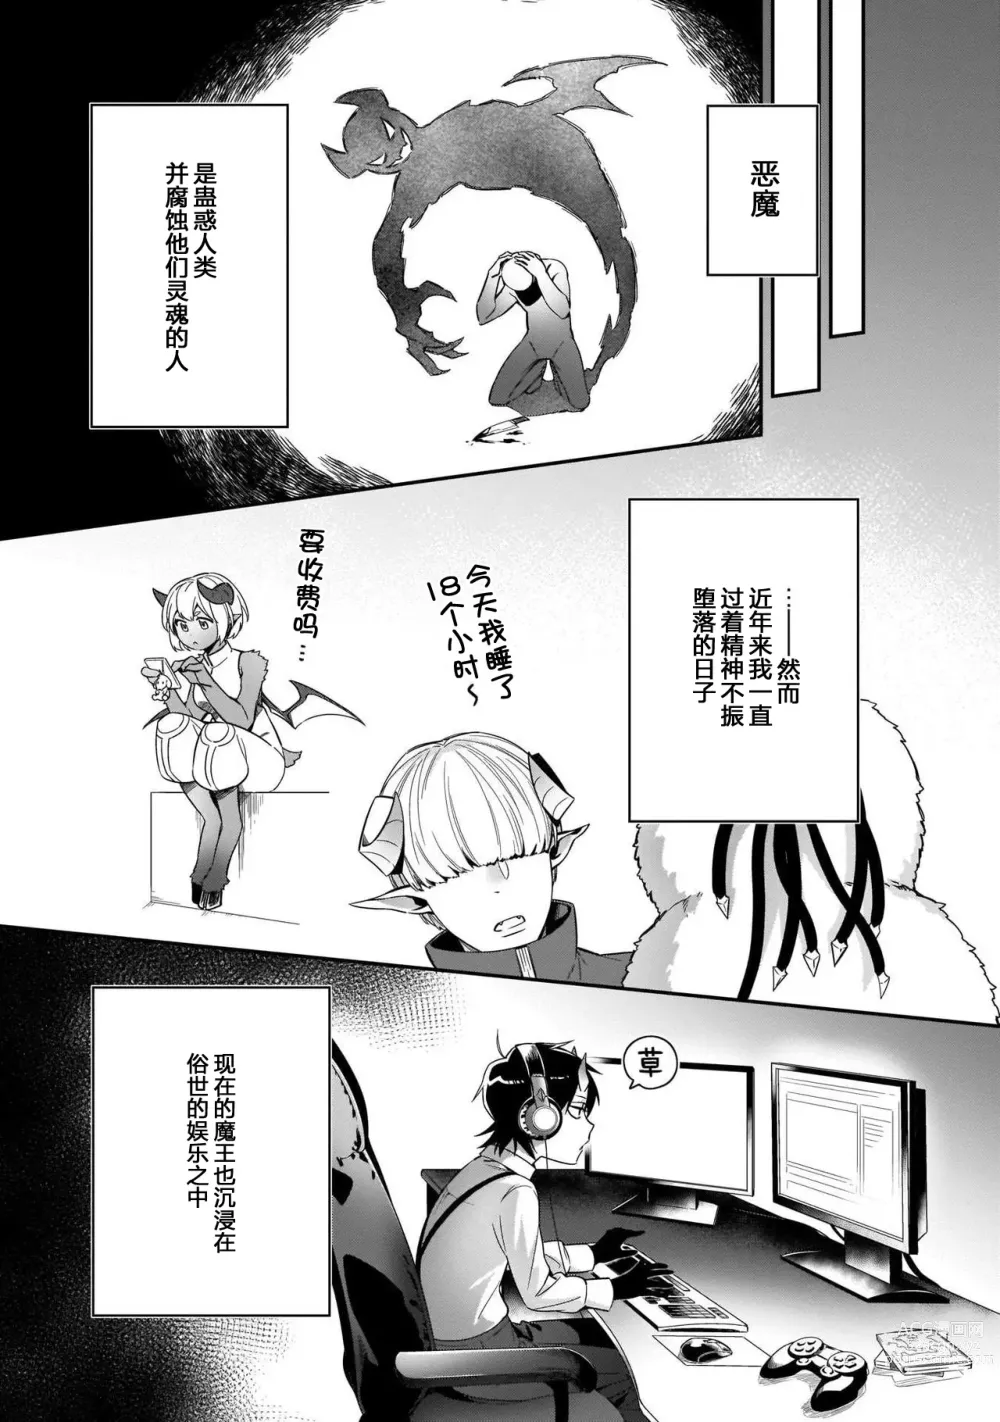 Page 3 of manga Torokeru kaikan sokuochi akuma 1-3